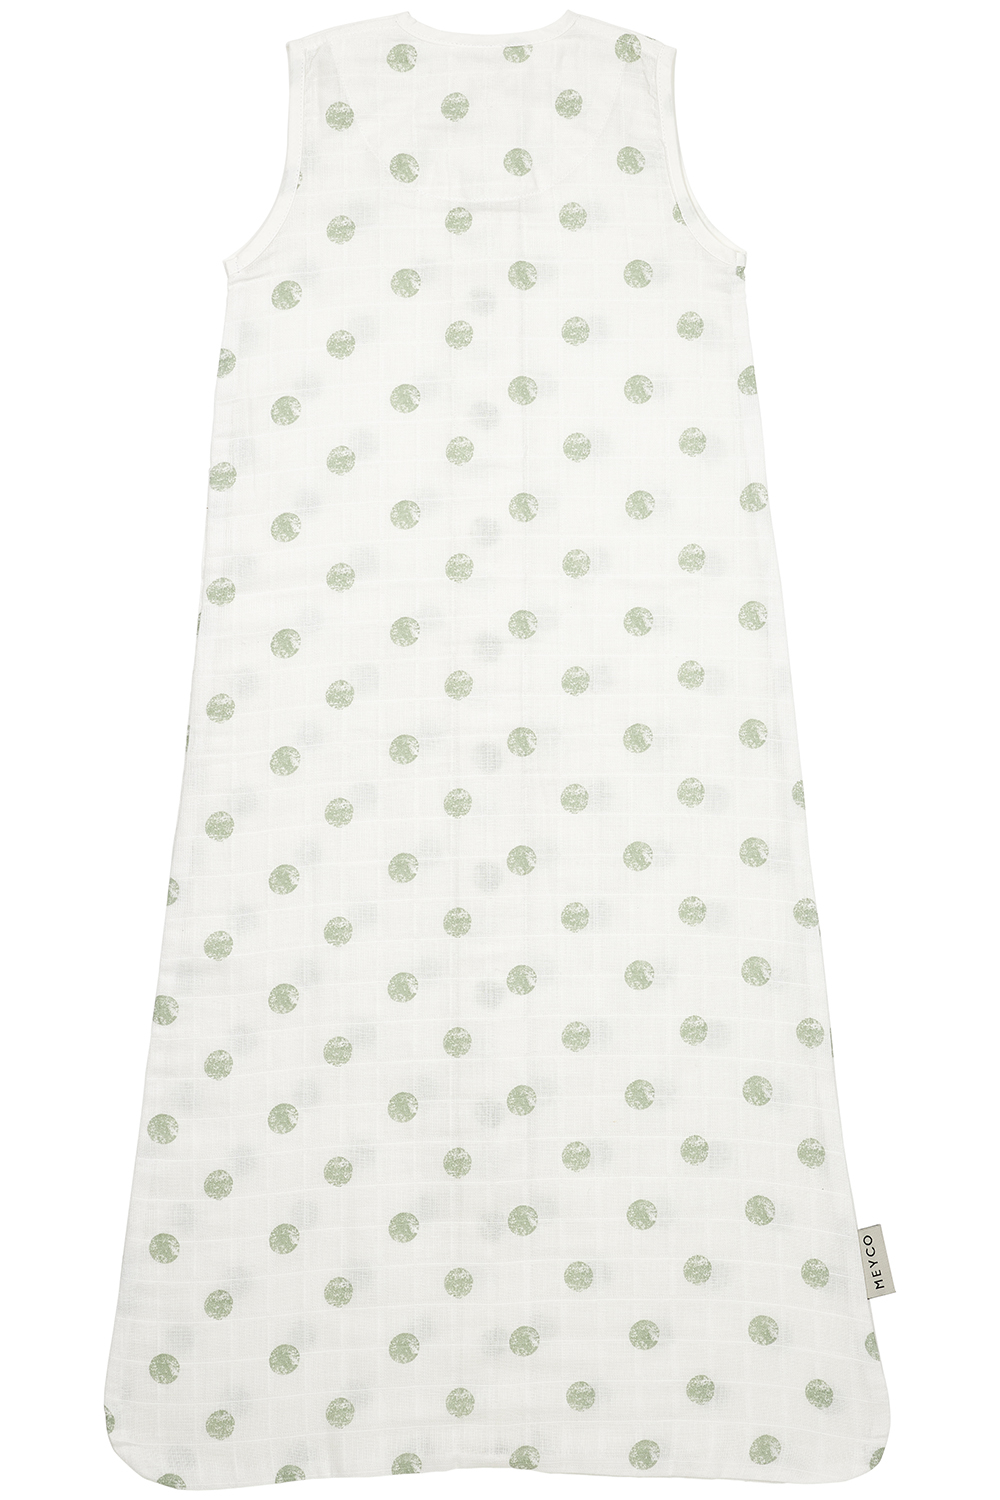 Sleepingbag muslin Dots - soft green - 90cm